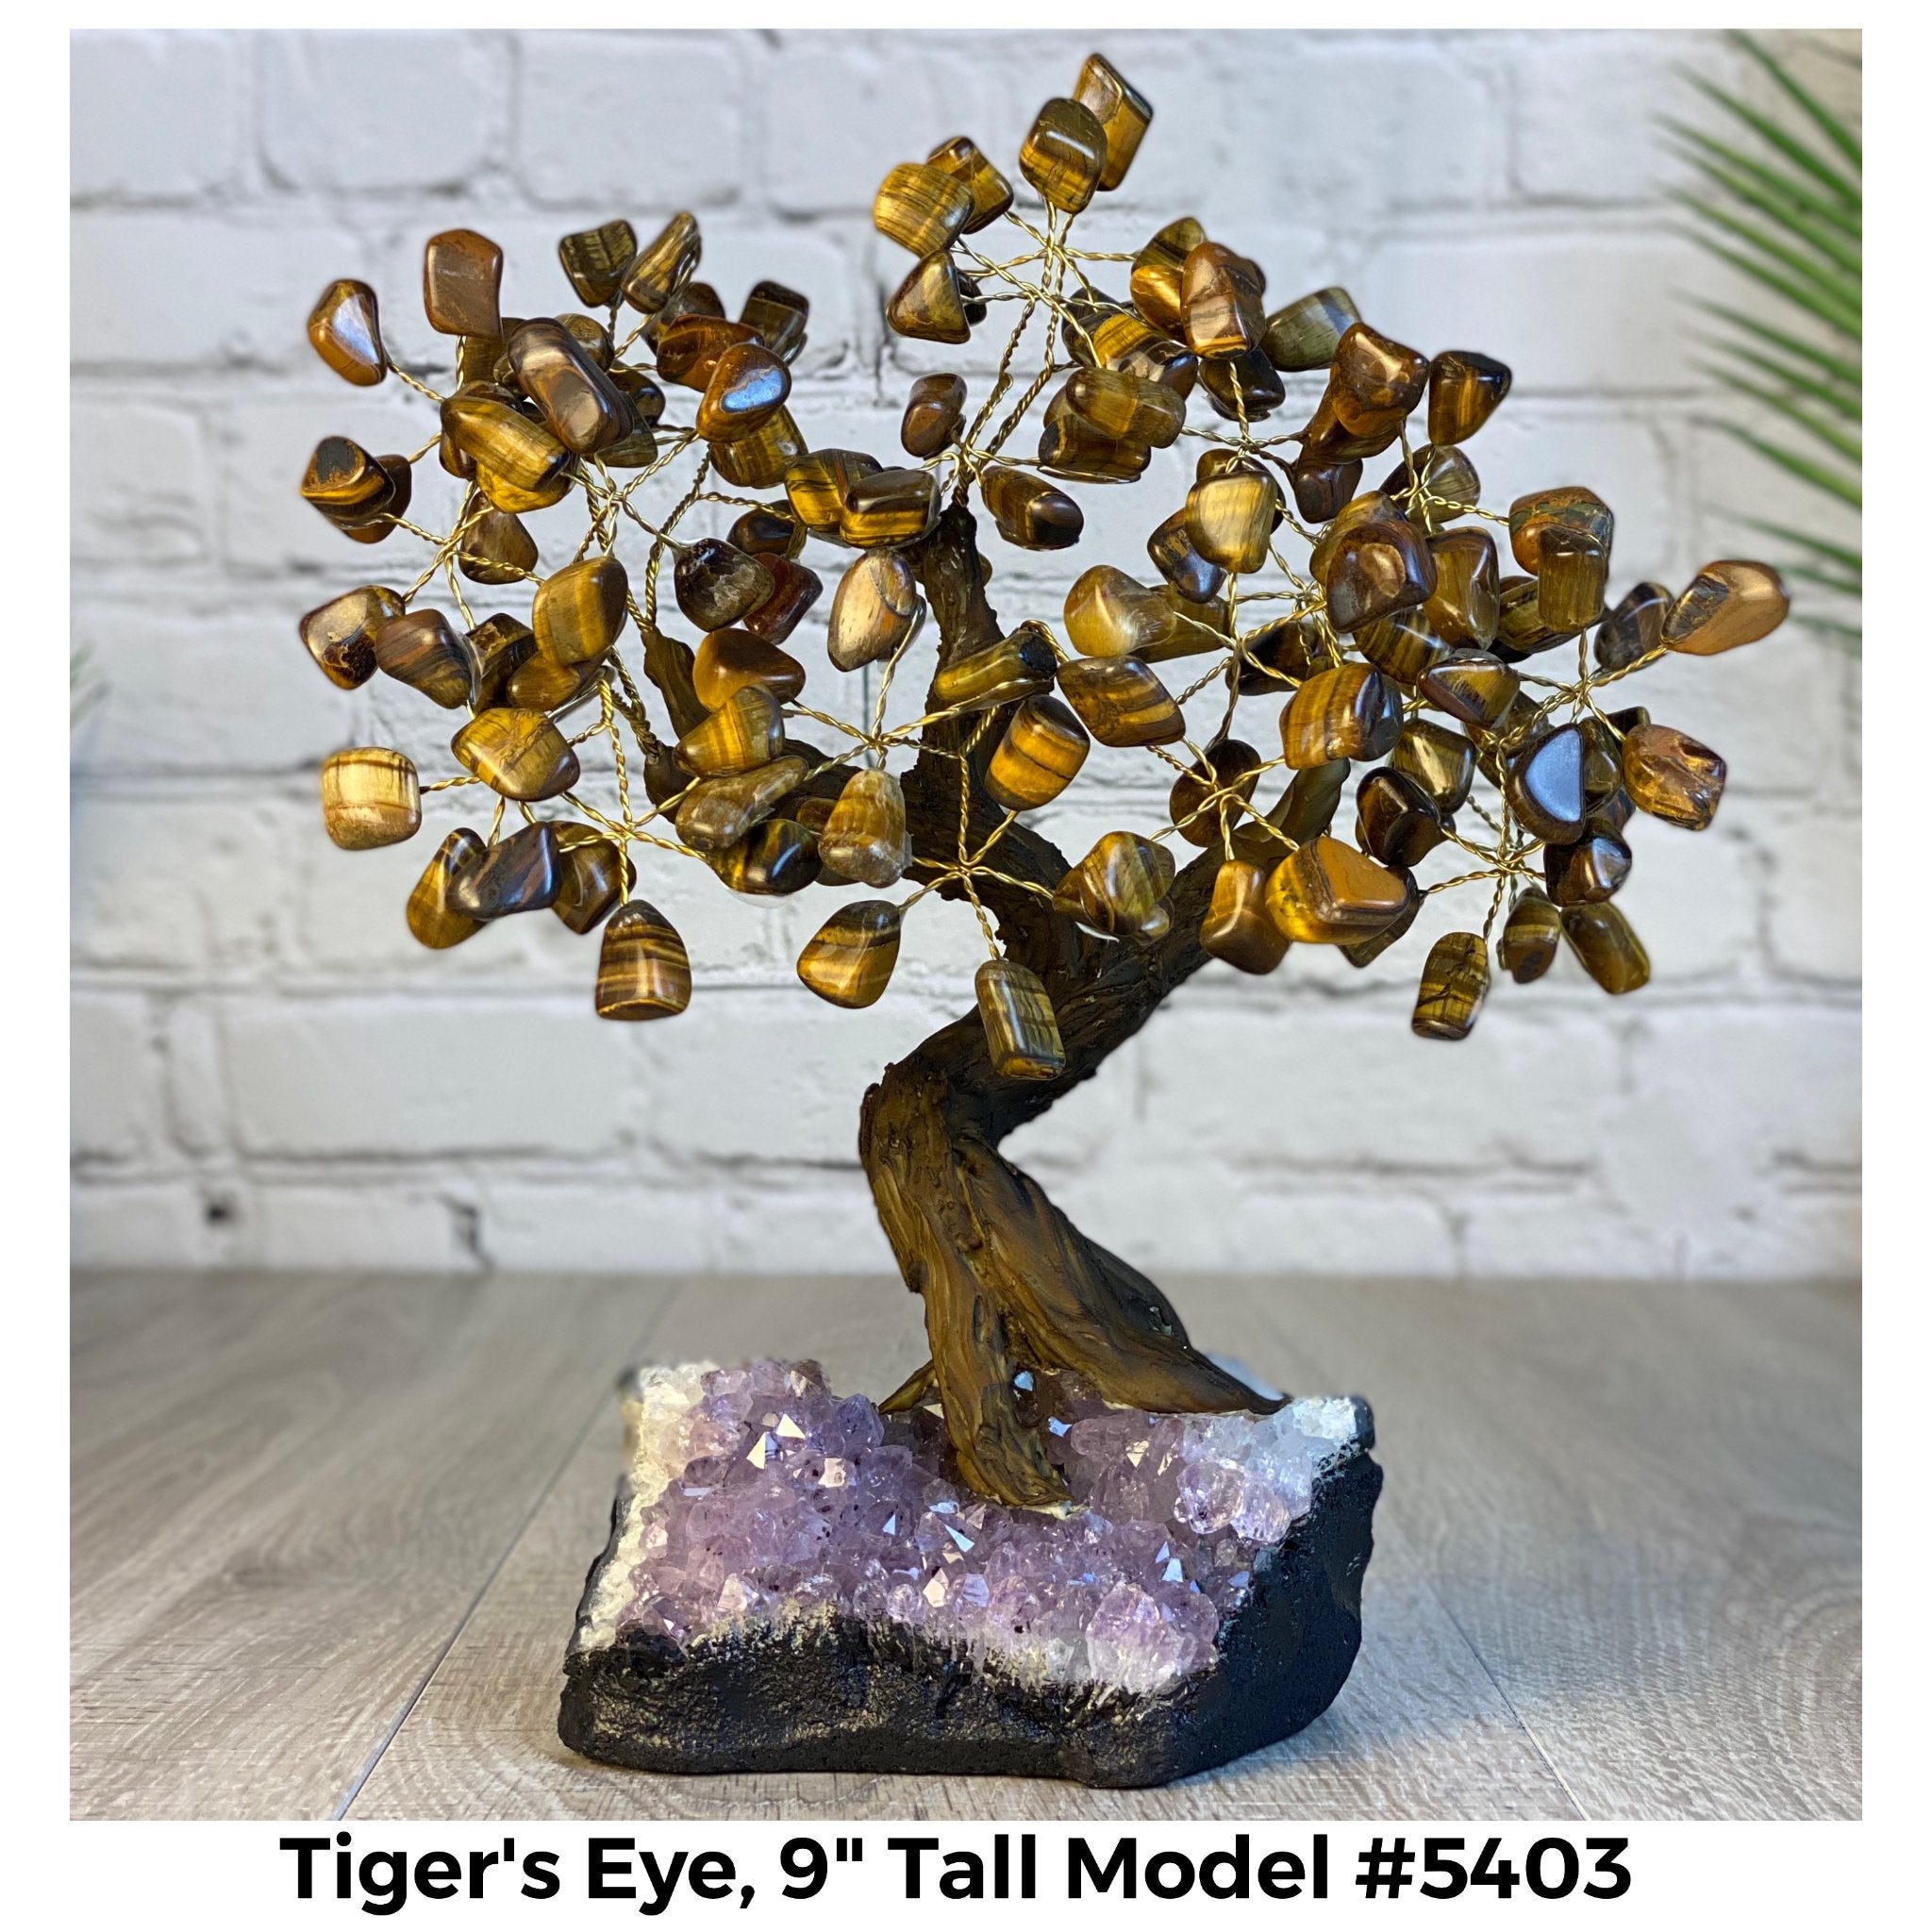 Tiger's Eye 9" Tall Handmade Gemstone Tree on a Crystal base, 120 Gems #5403TIGE - Brazil GemsBrazil GemsTiger's Eye 9" Tall Handmade Gemstone Tree on a Crystal base, 120 Gems #5403TIGEGemstone Trees5403TIGE